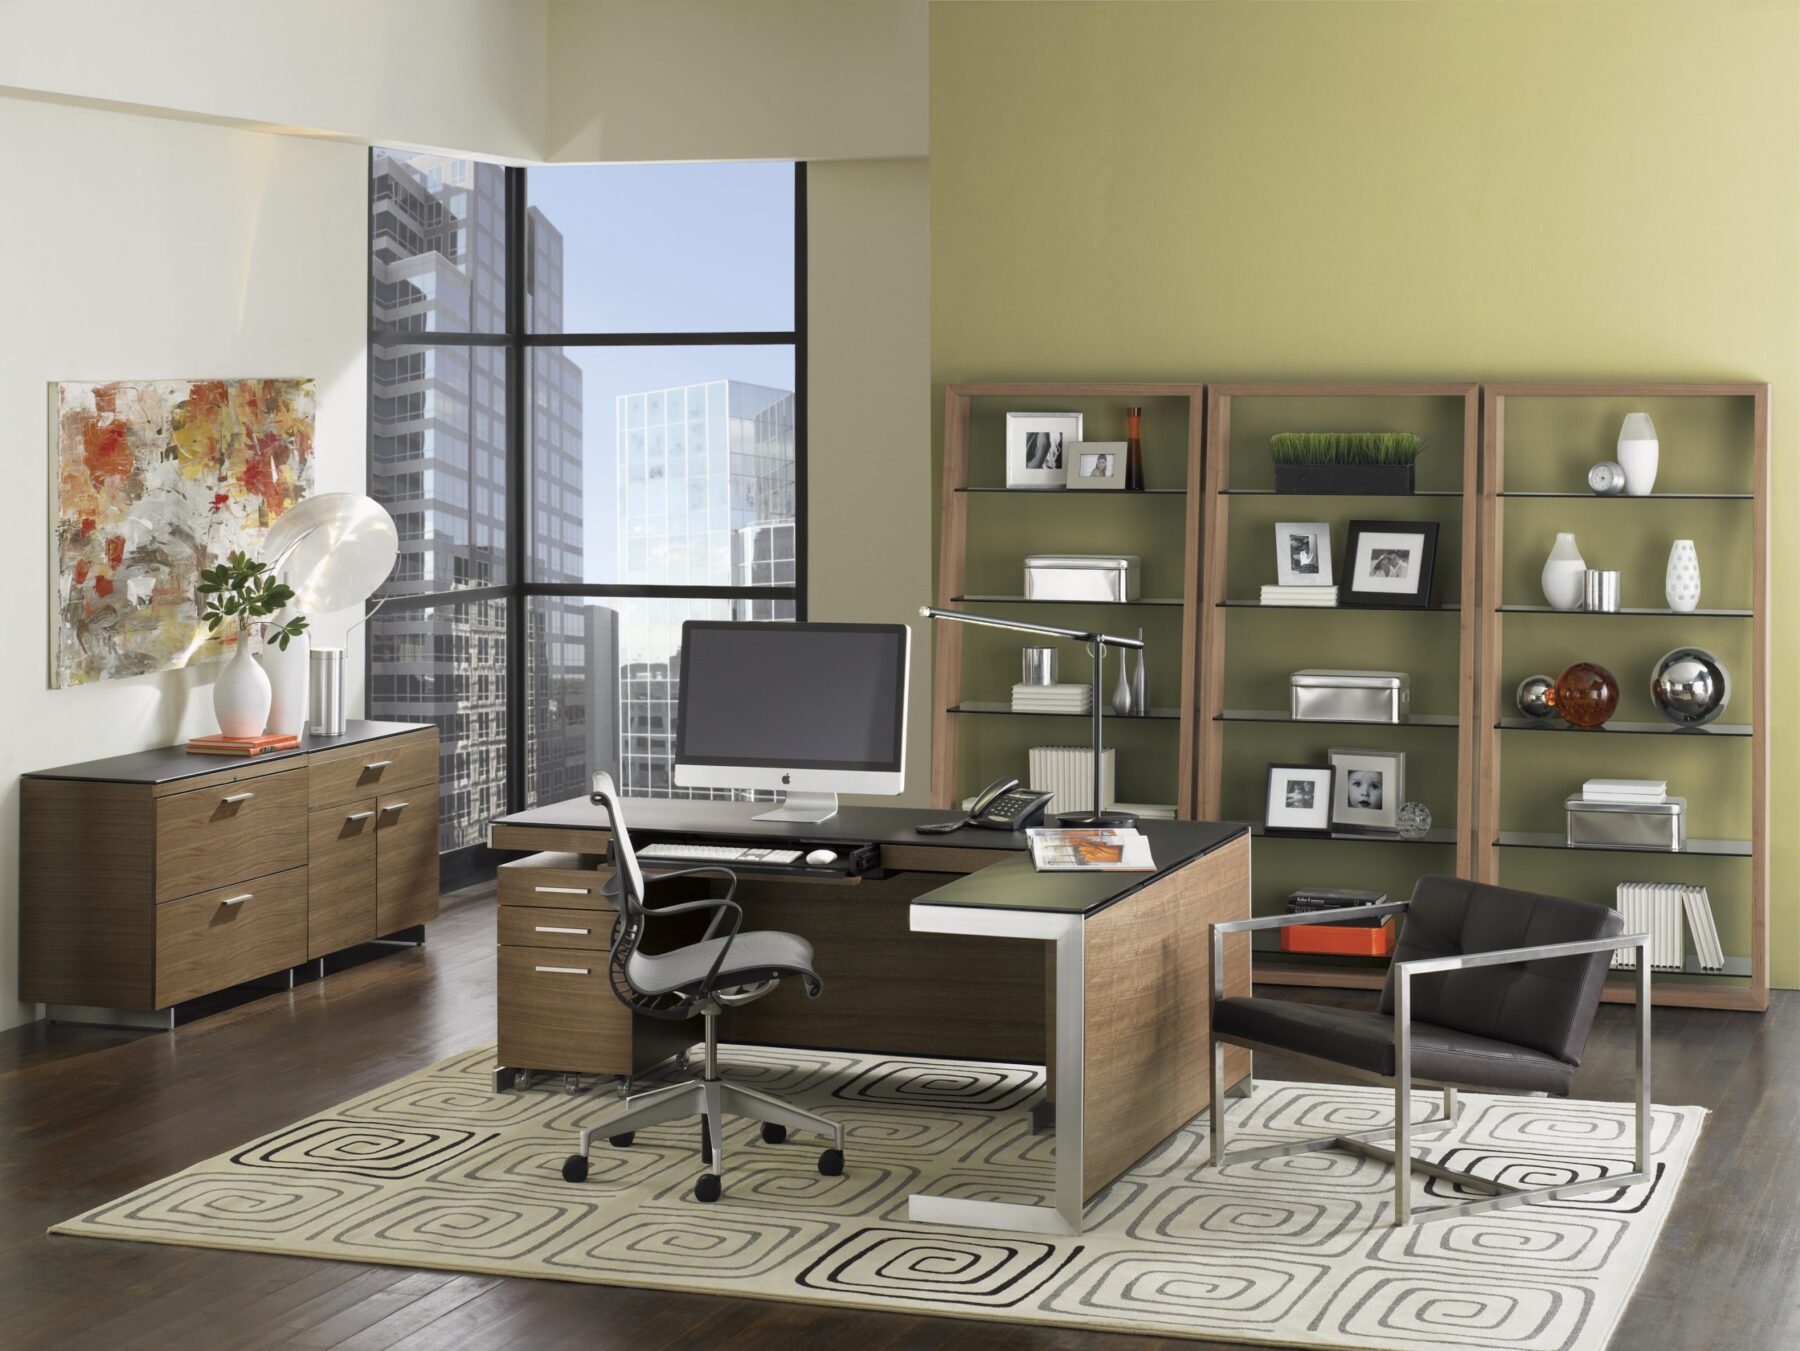 sequel-office-walnut-bdi-modular-office-furniture